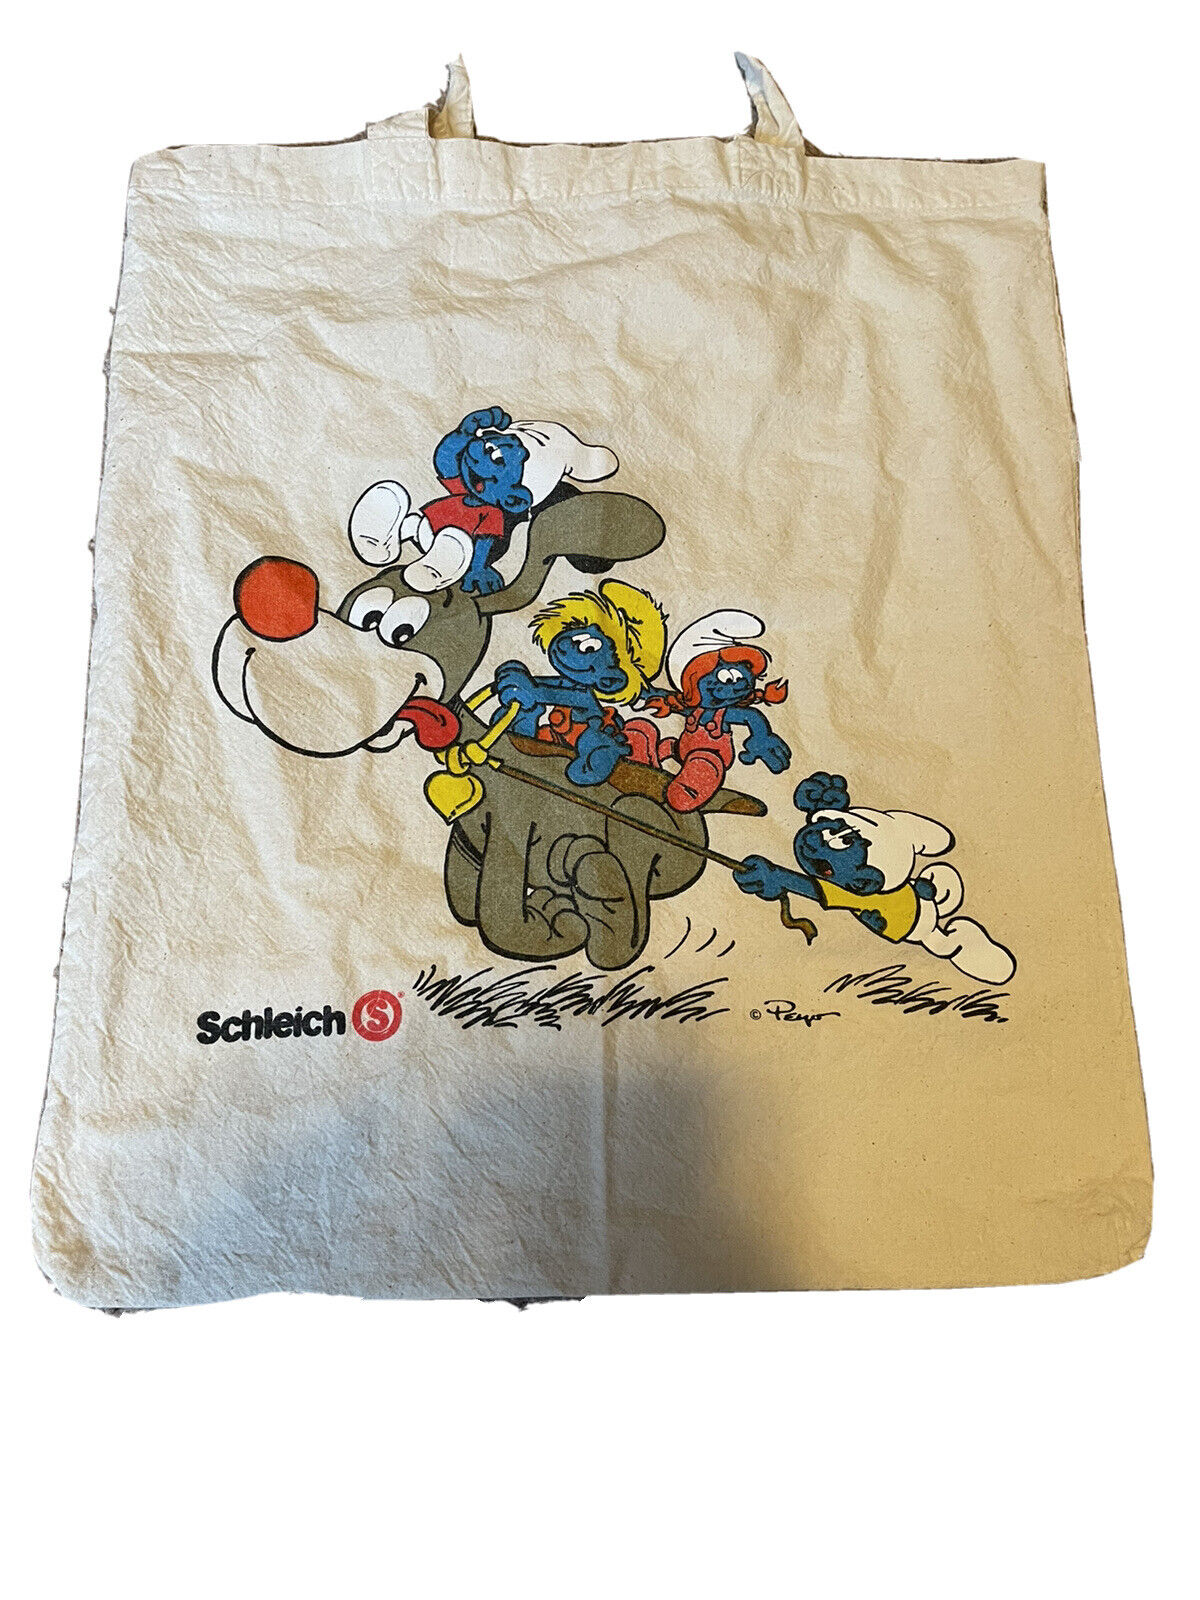 Vintage Schleich Canvas Smurfs Bag With The Dog